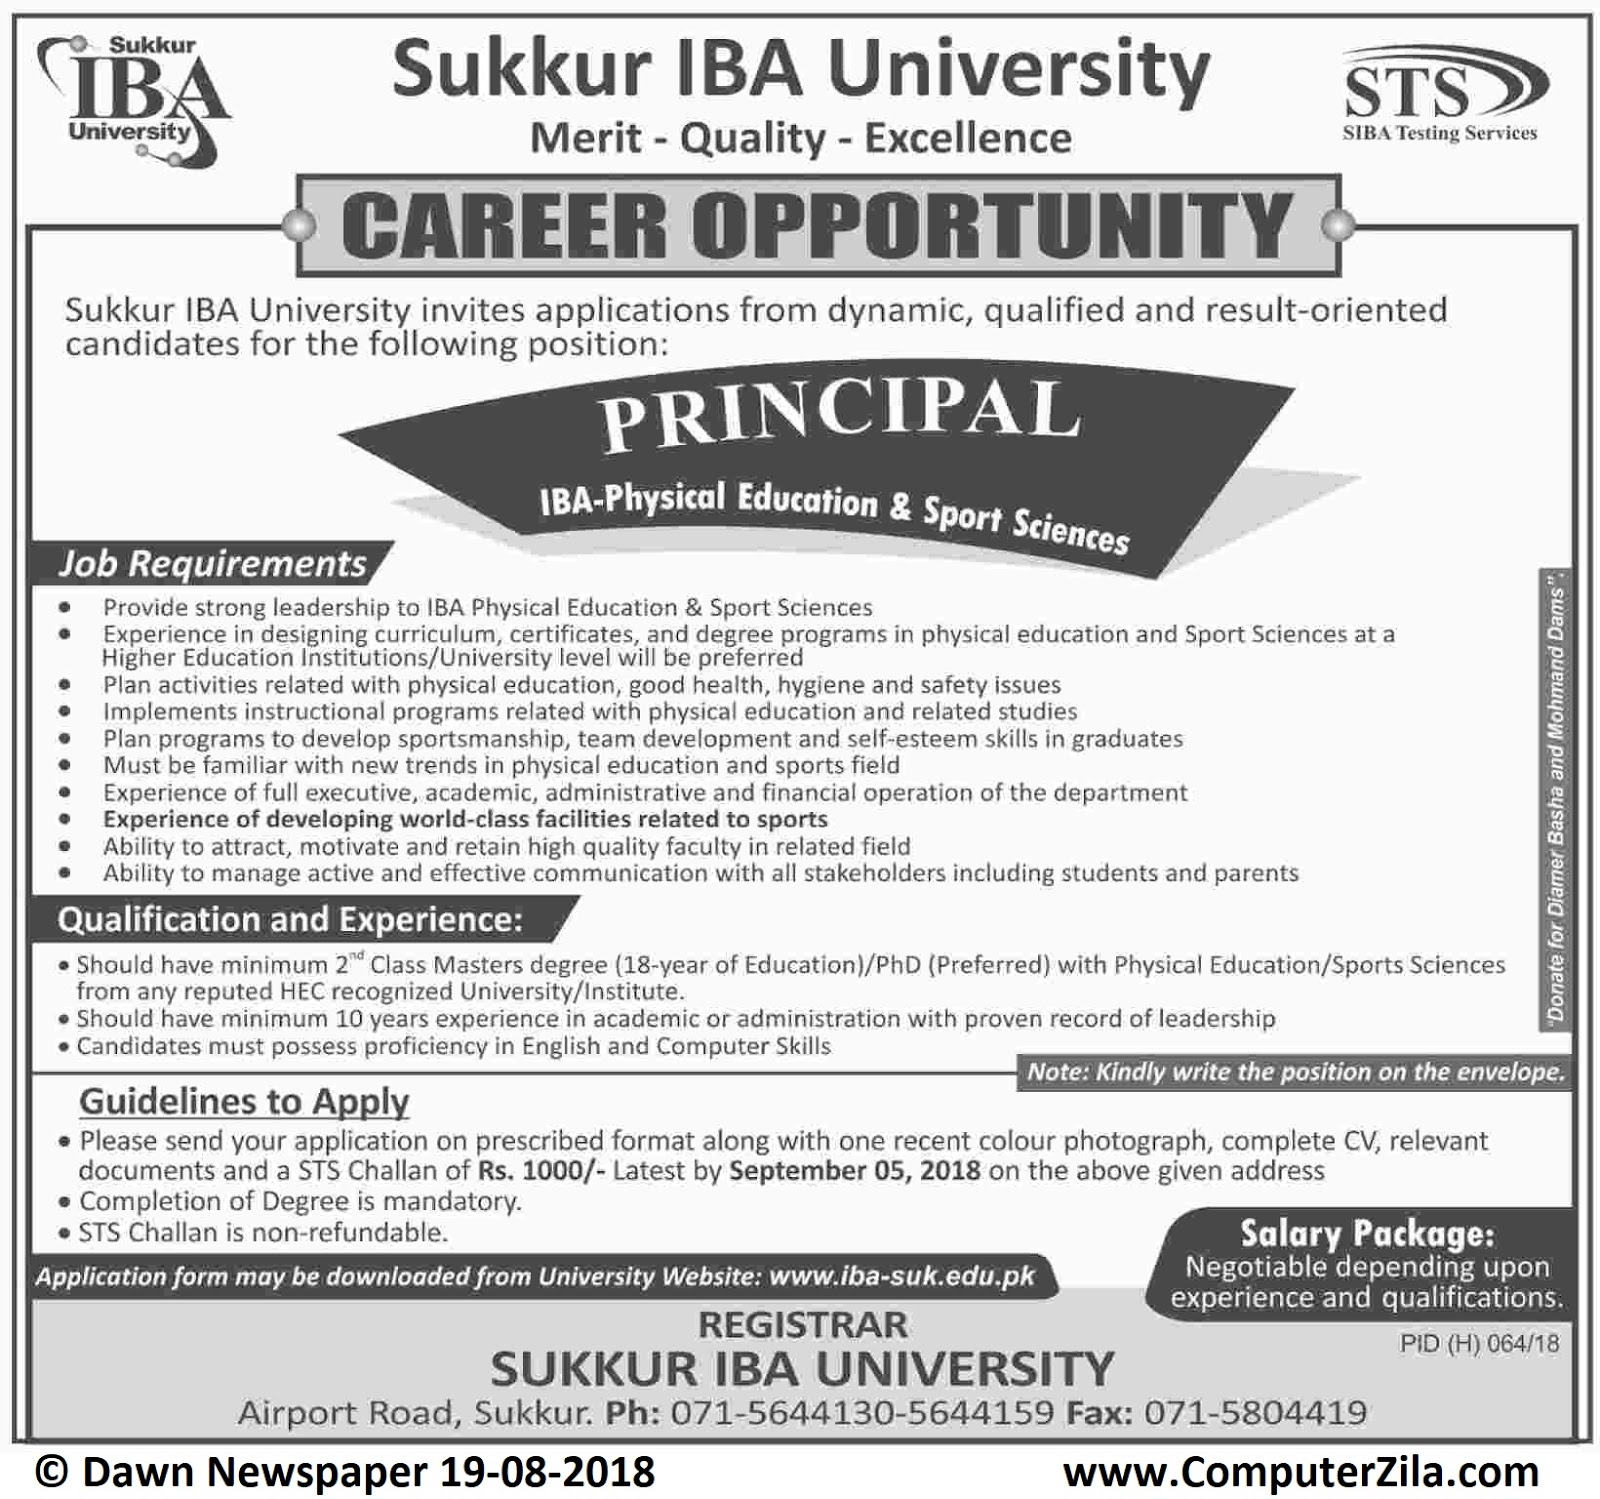 Career Opportunity at Sukkur IBA University